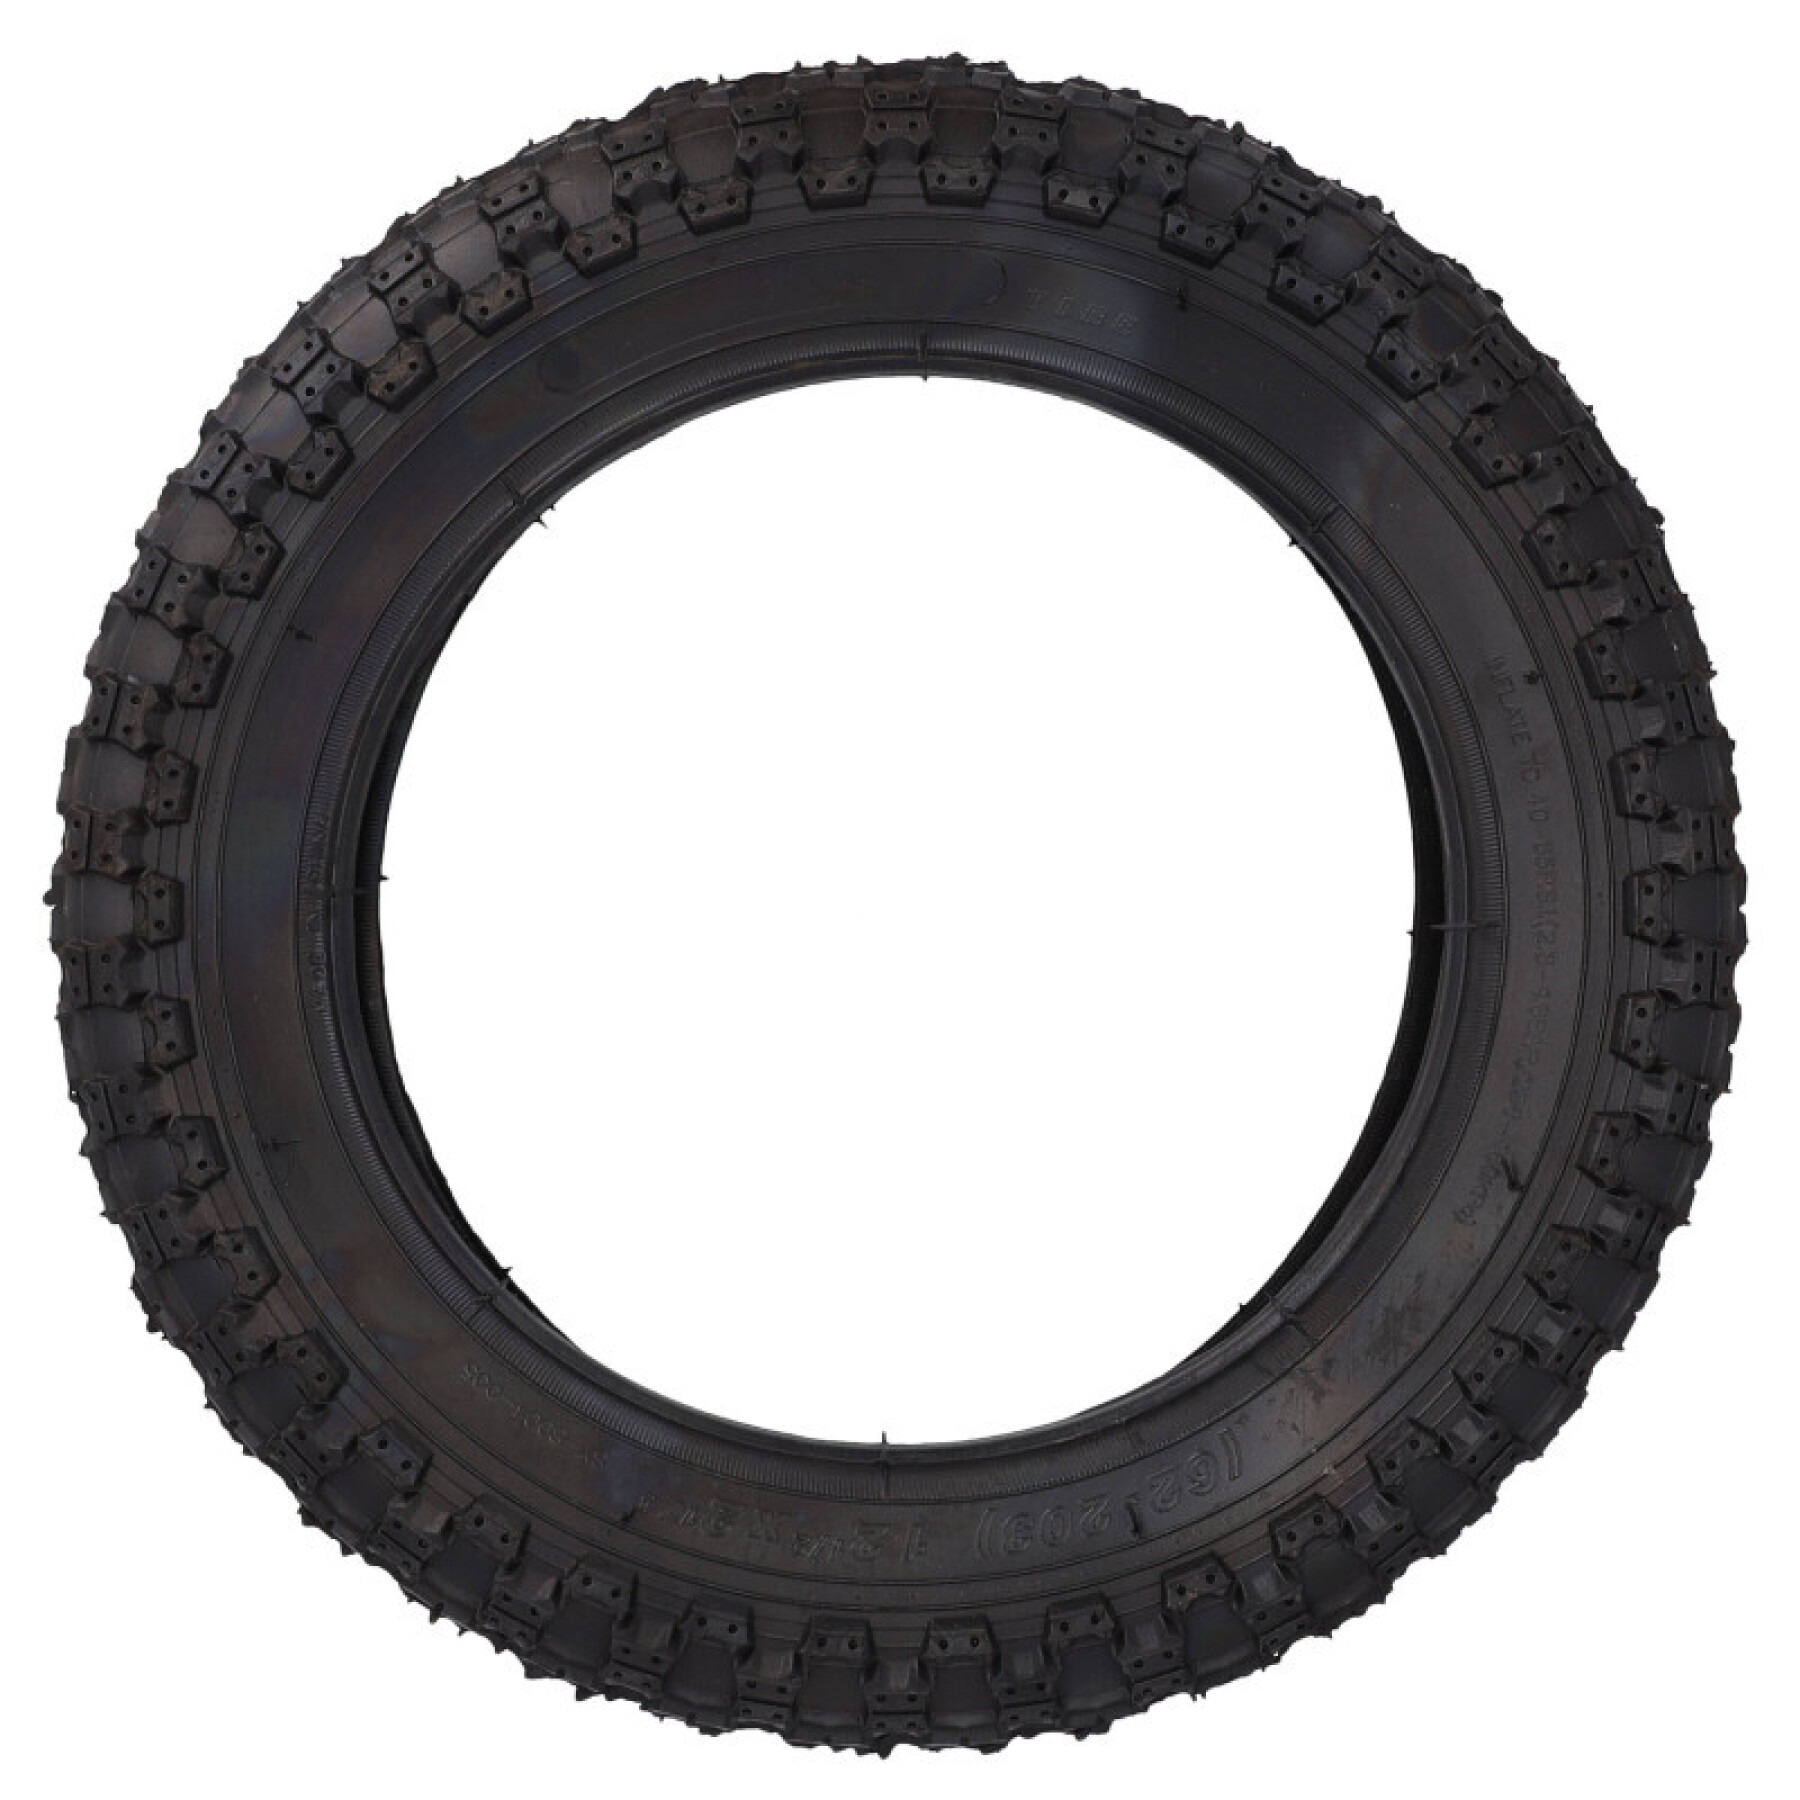 Bike tire Durca 12-1/2x2-1/4(62-203)